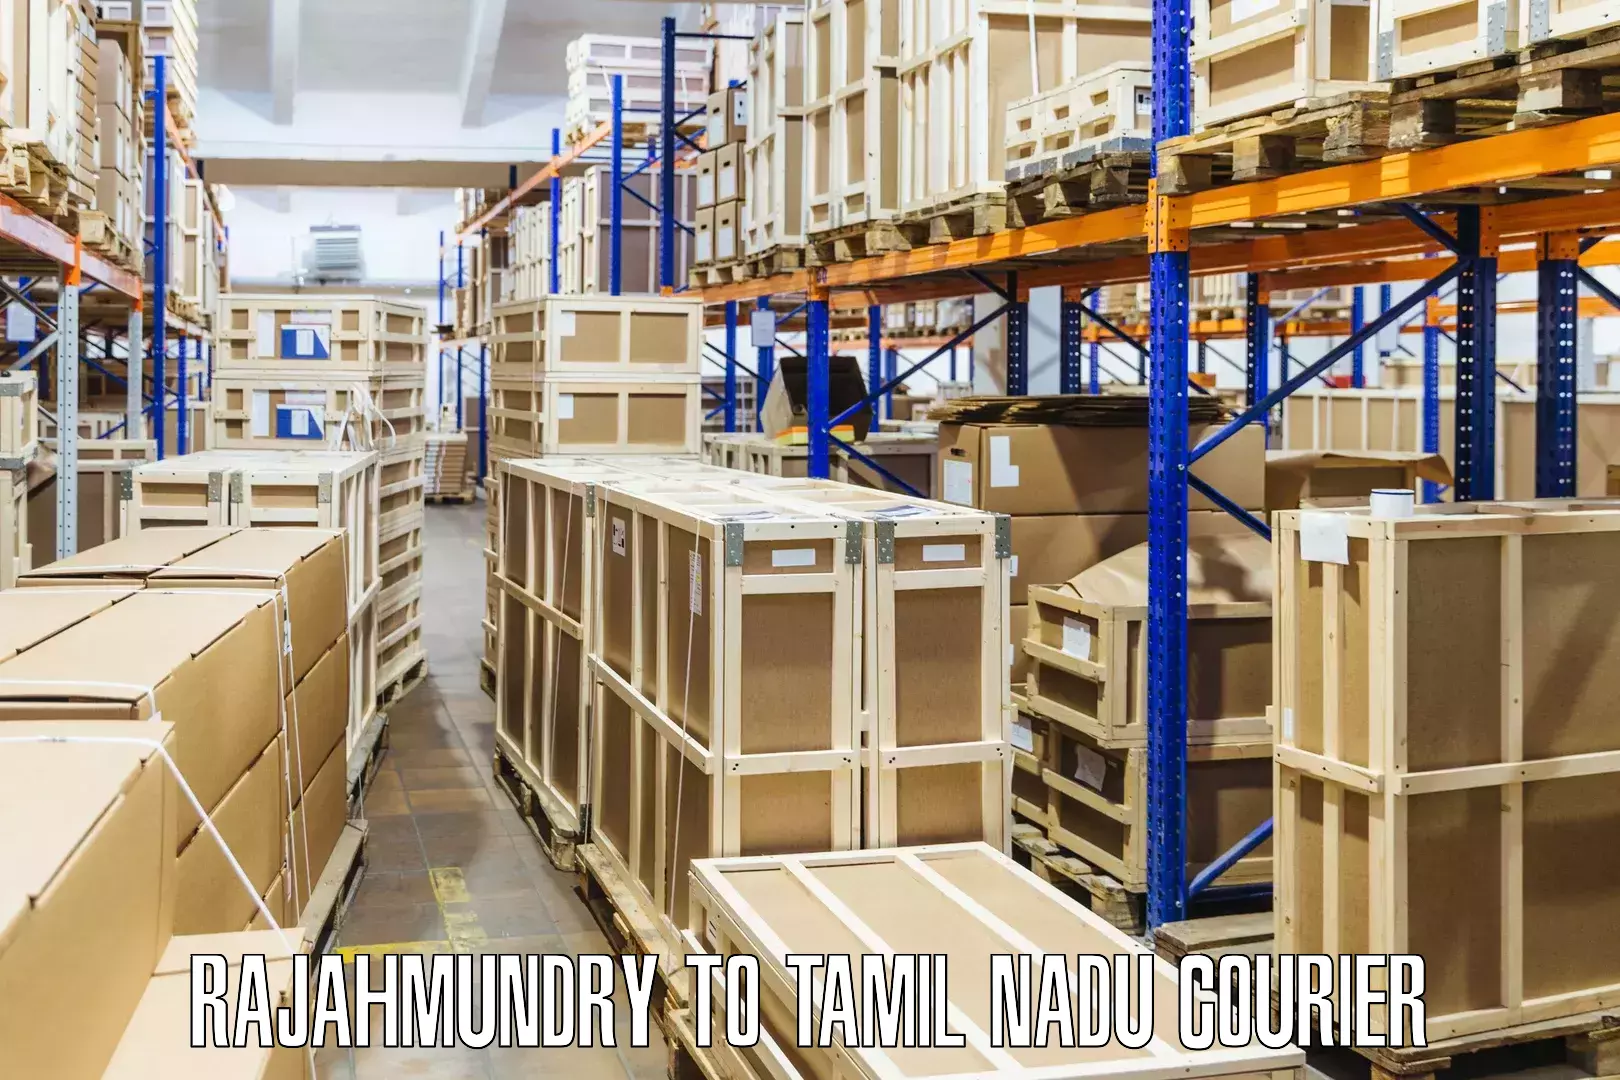 High-capacity parcel service Rajahmundry to Tiruturaipundi